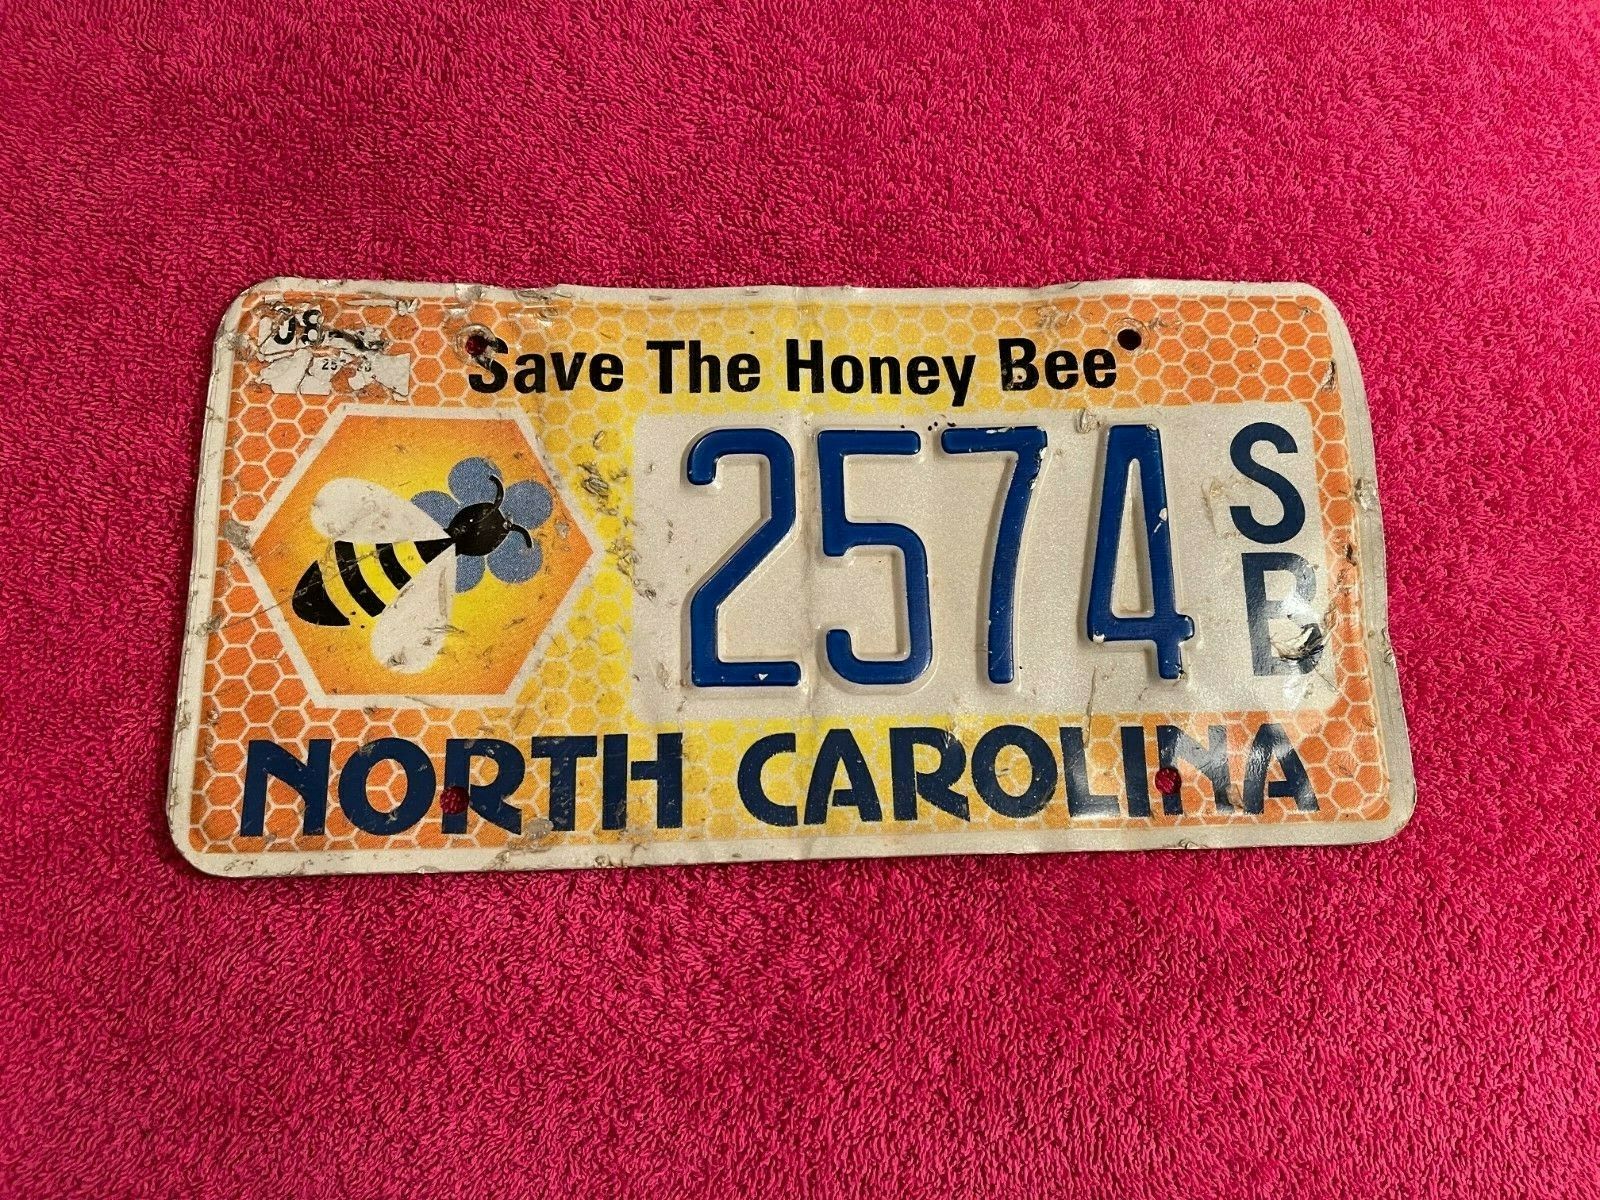 North Carolina License Plate Tag -2008-  2574 - Save The Honey Bee